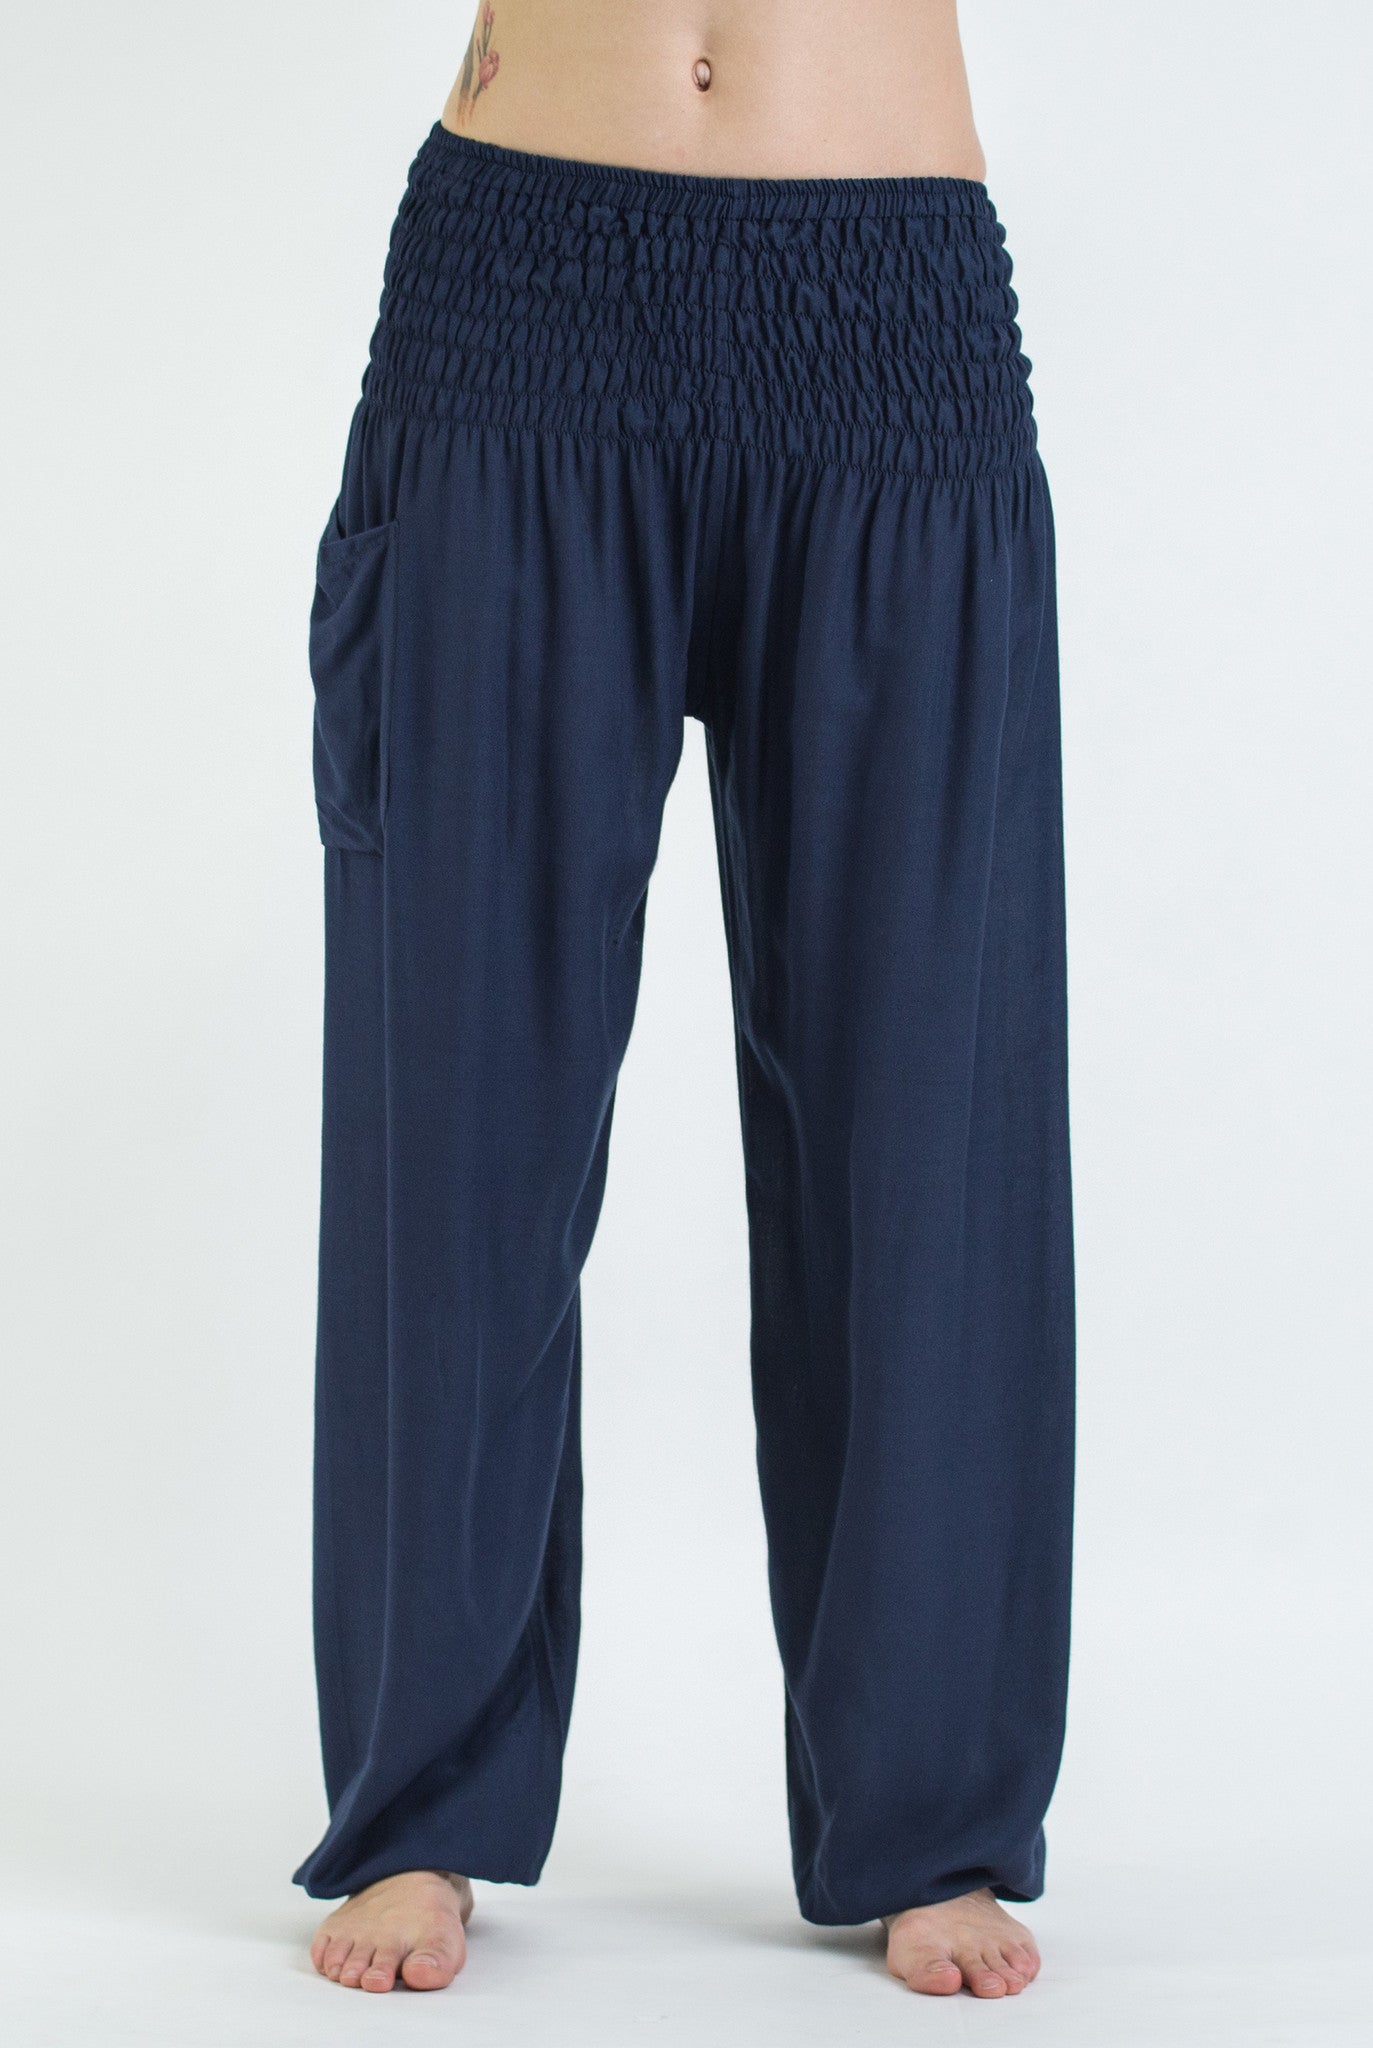 Sure Design Unisex Solid Color Harem Pants in Blue | Sure Design